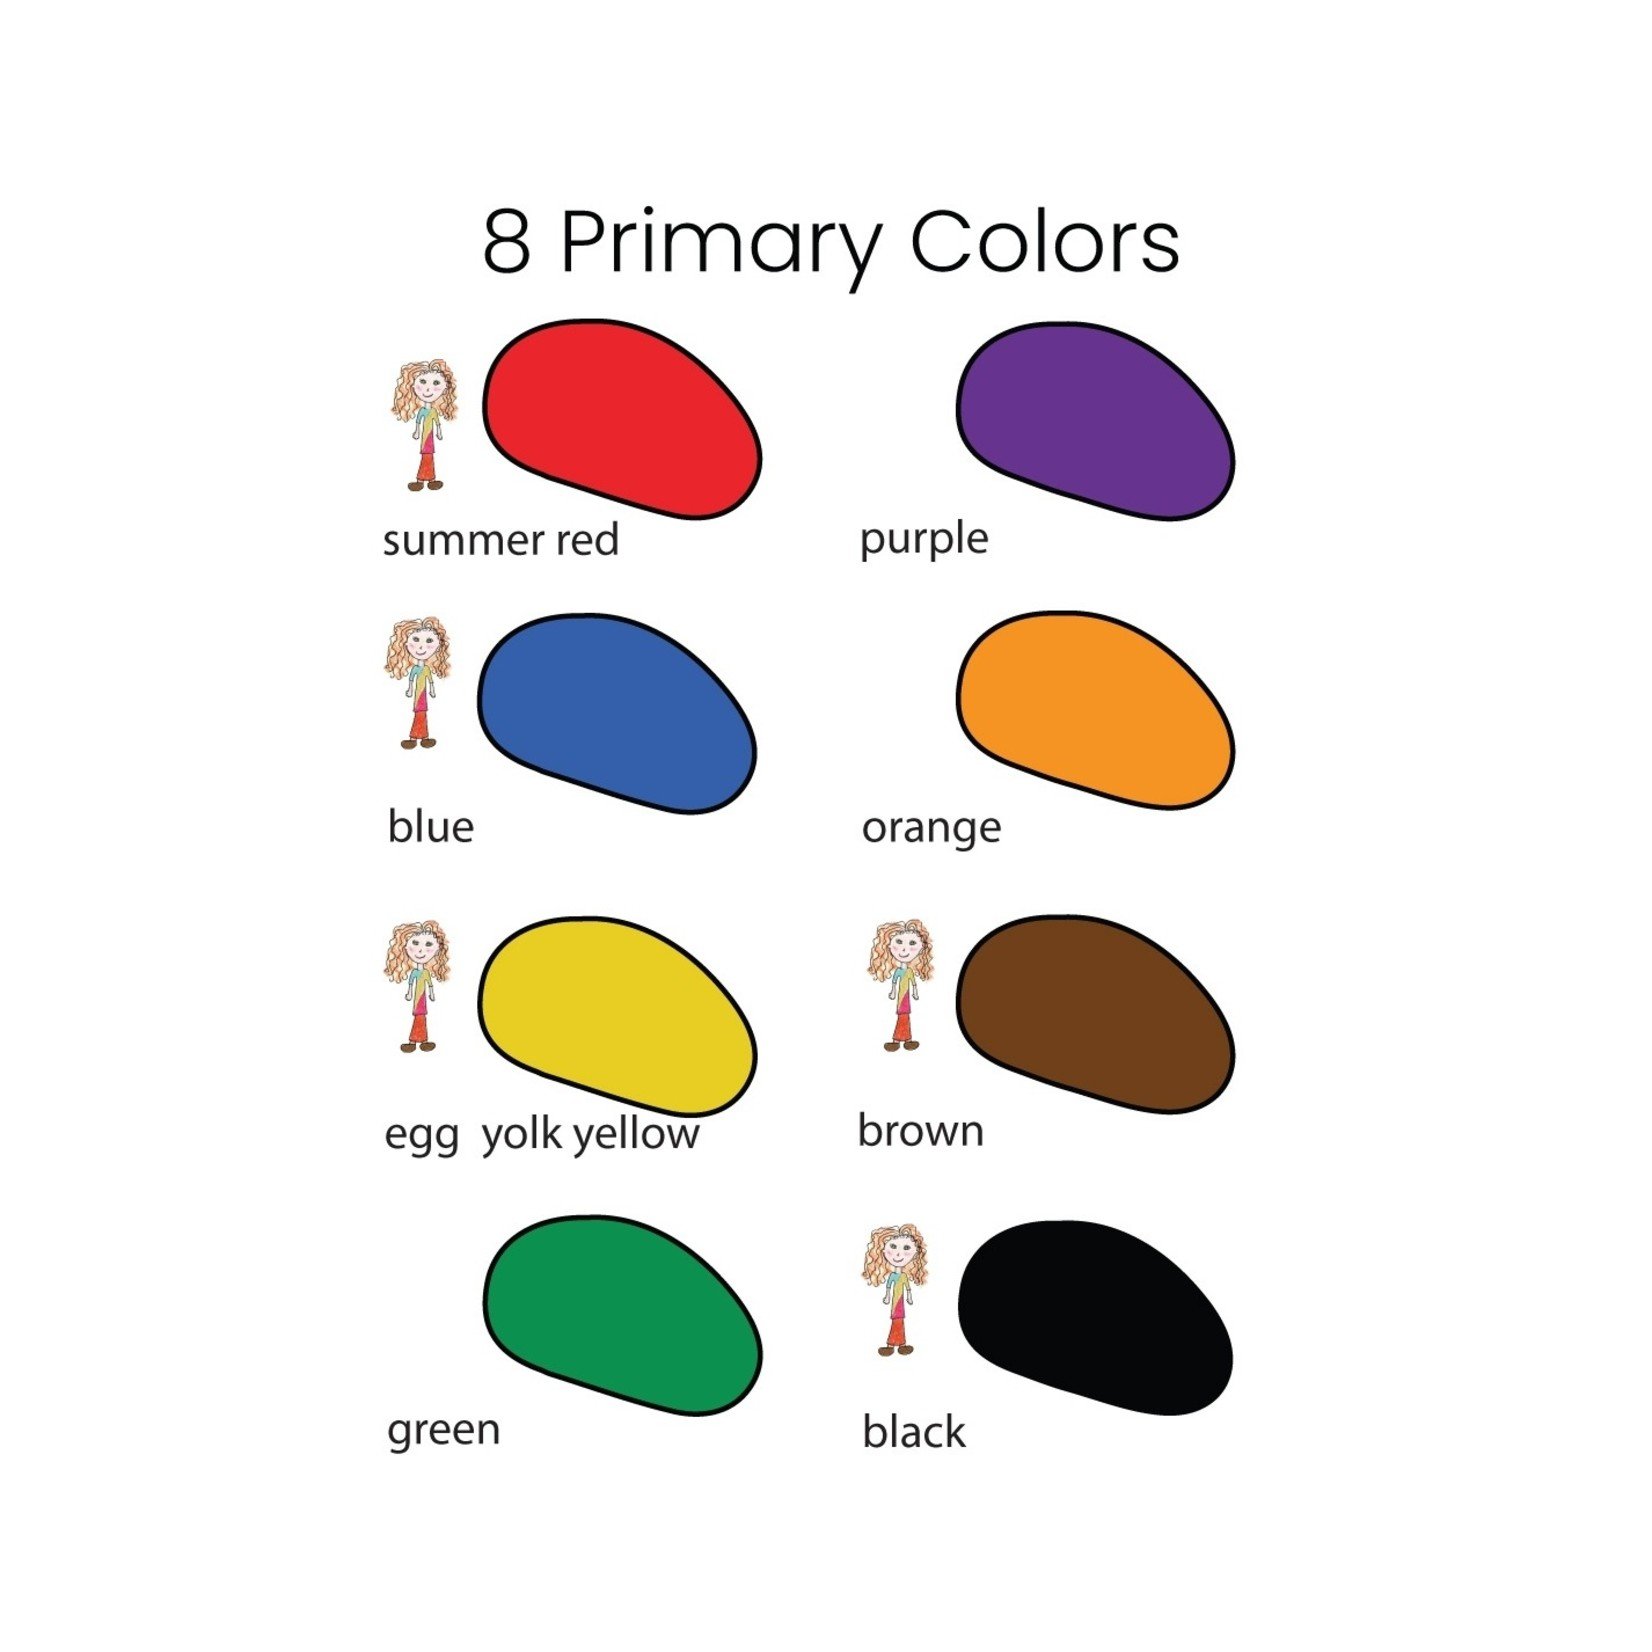 Crayon Rocks 16 Colors in a Muslin Bag